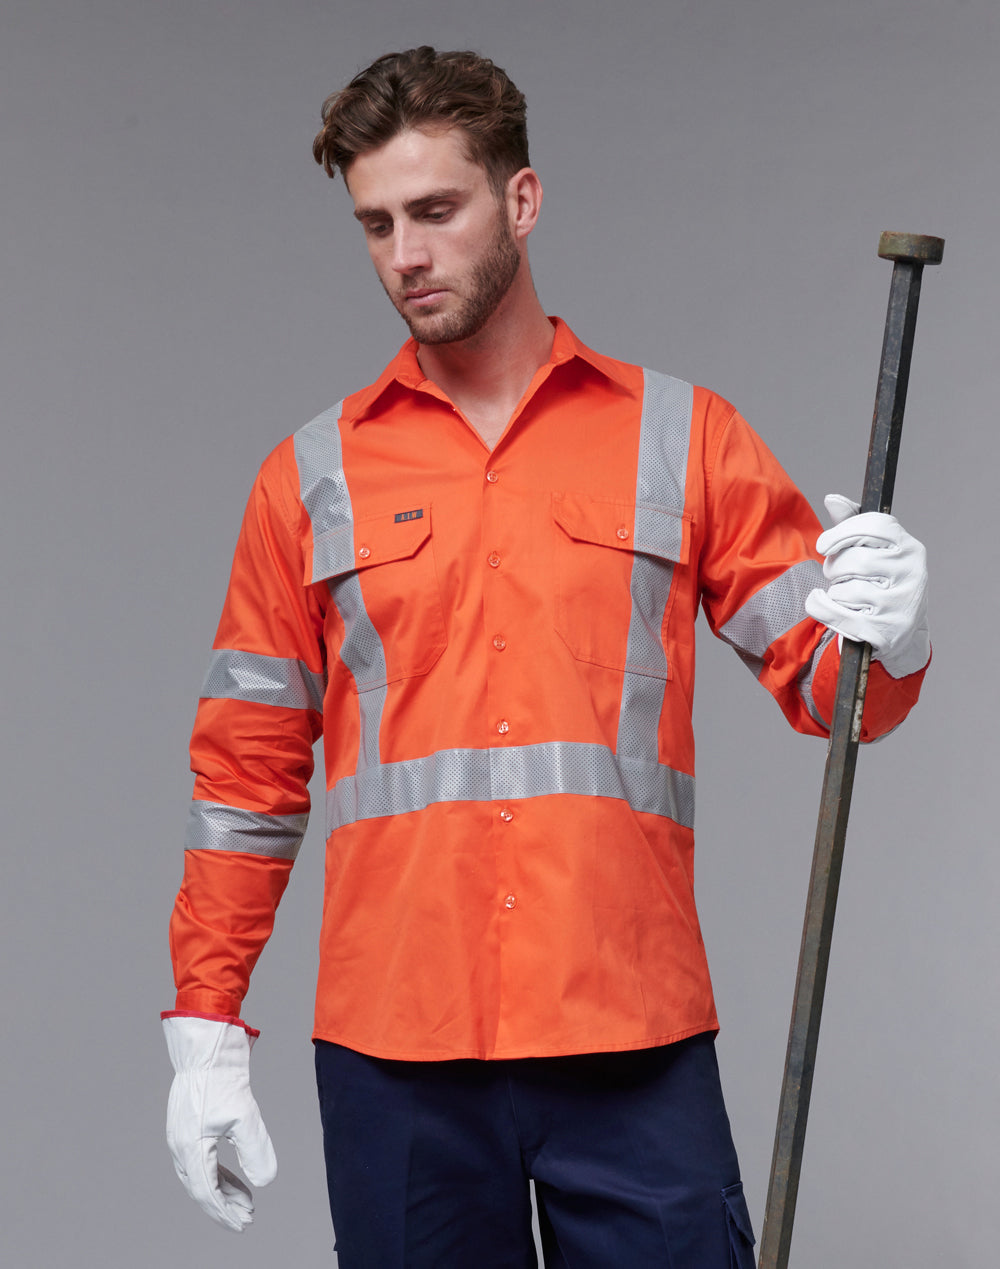 AIW SW66 NSW Rail Lightweight Safety Shirt